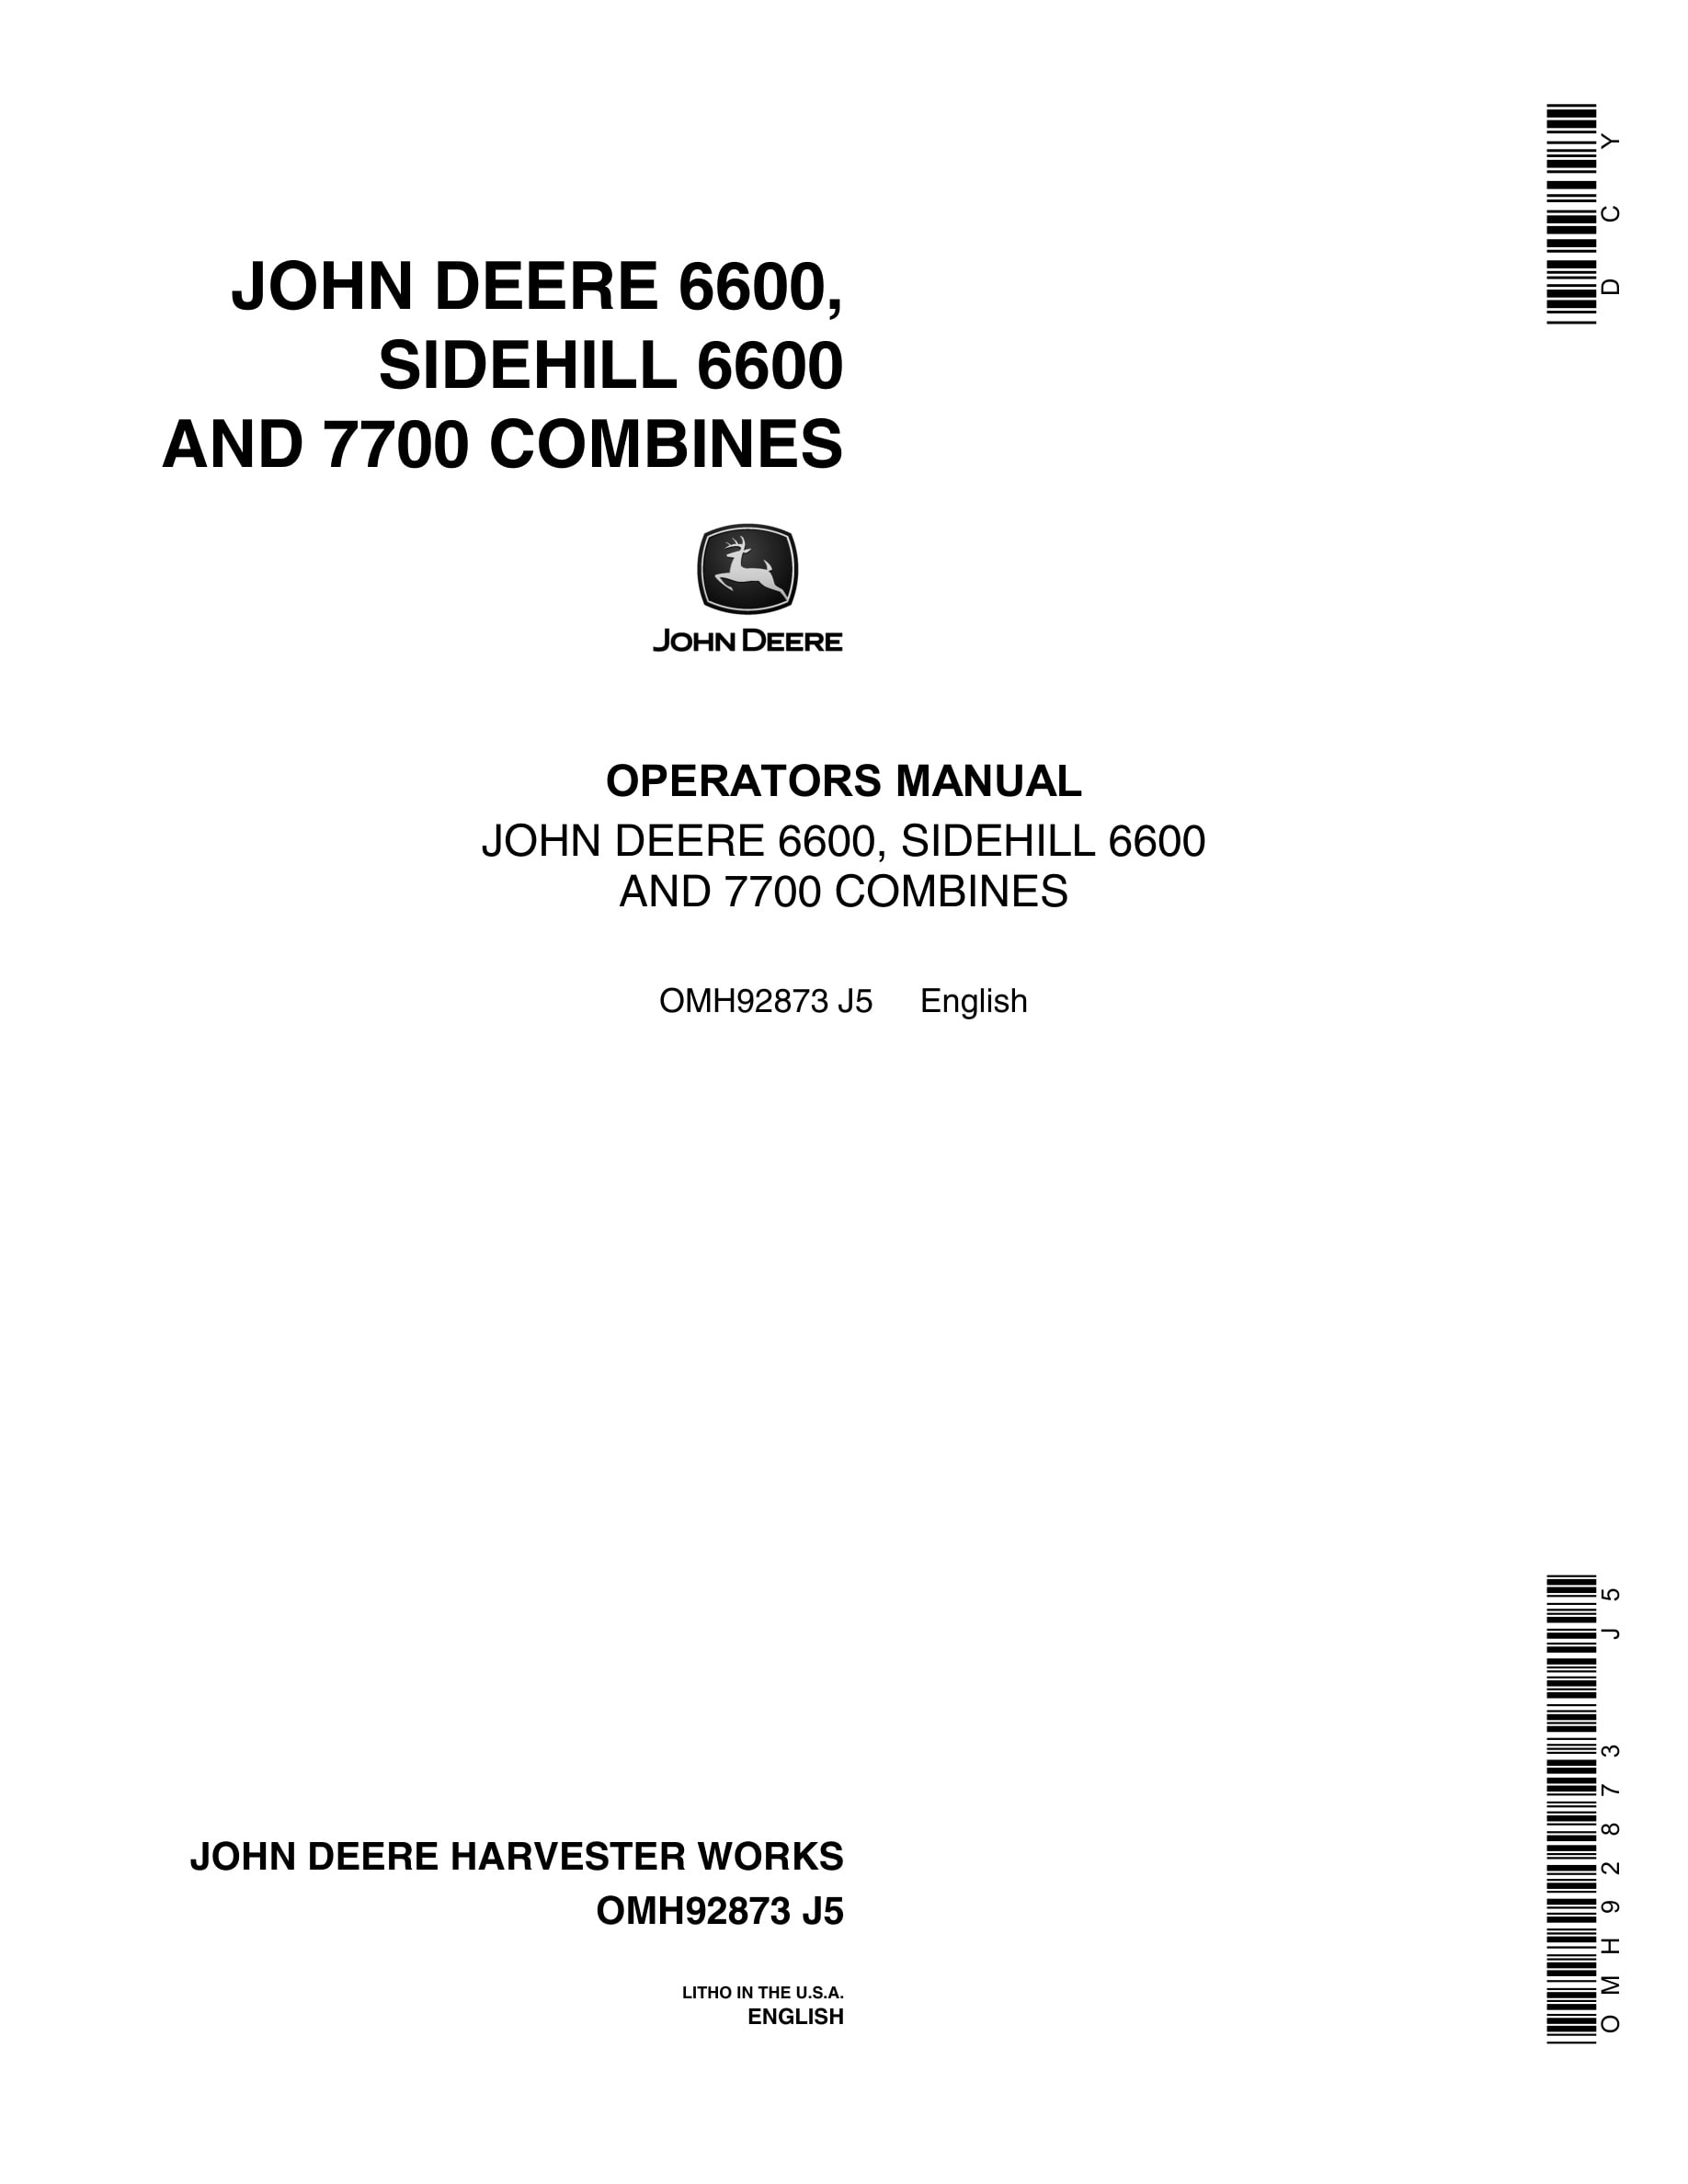 John Deere 6600, SIDEHILL 6600 AND 7700 Combine Operator Manual OMH92873-1